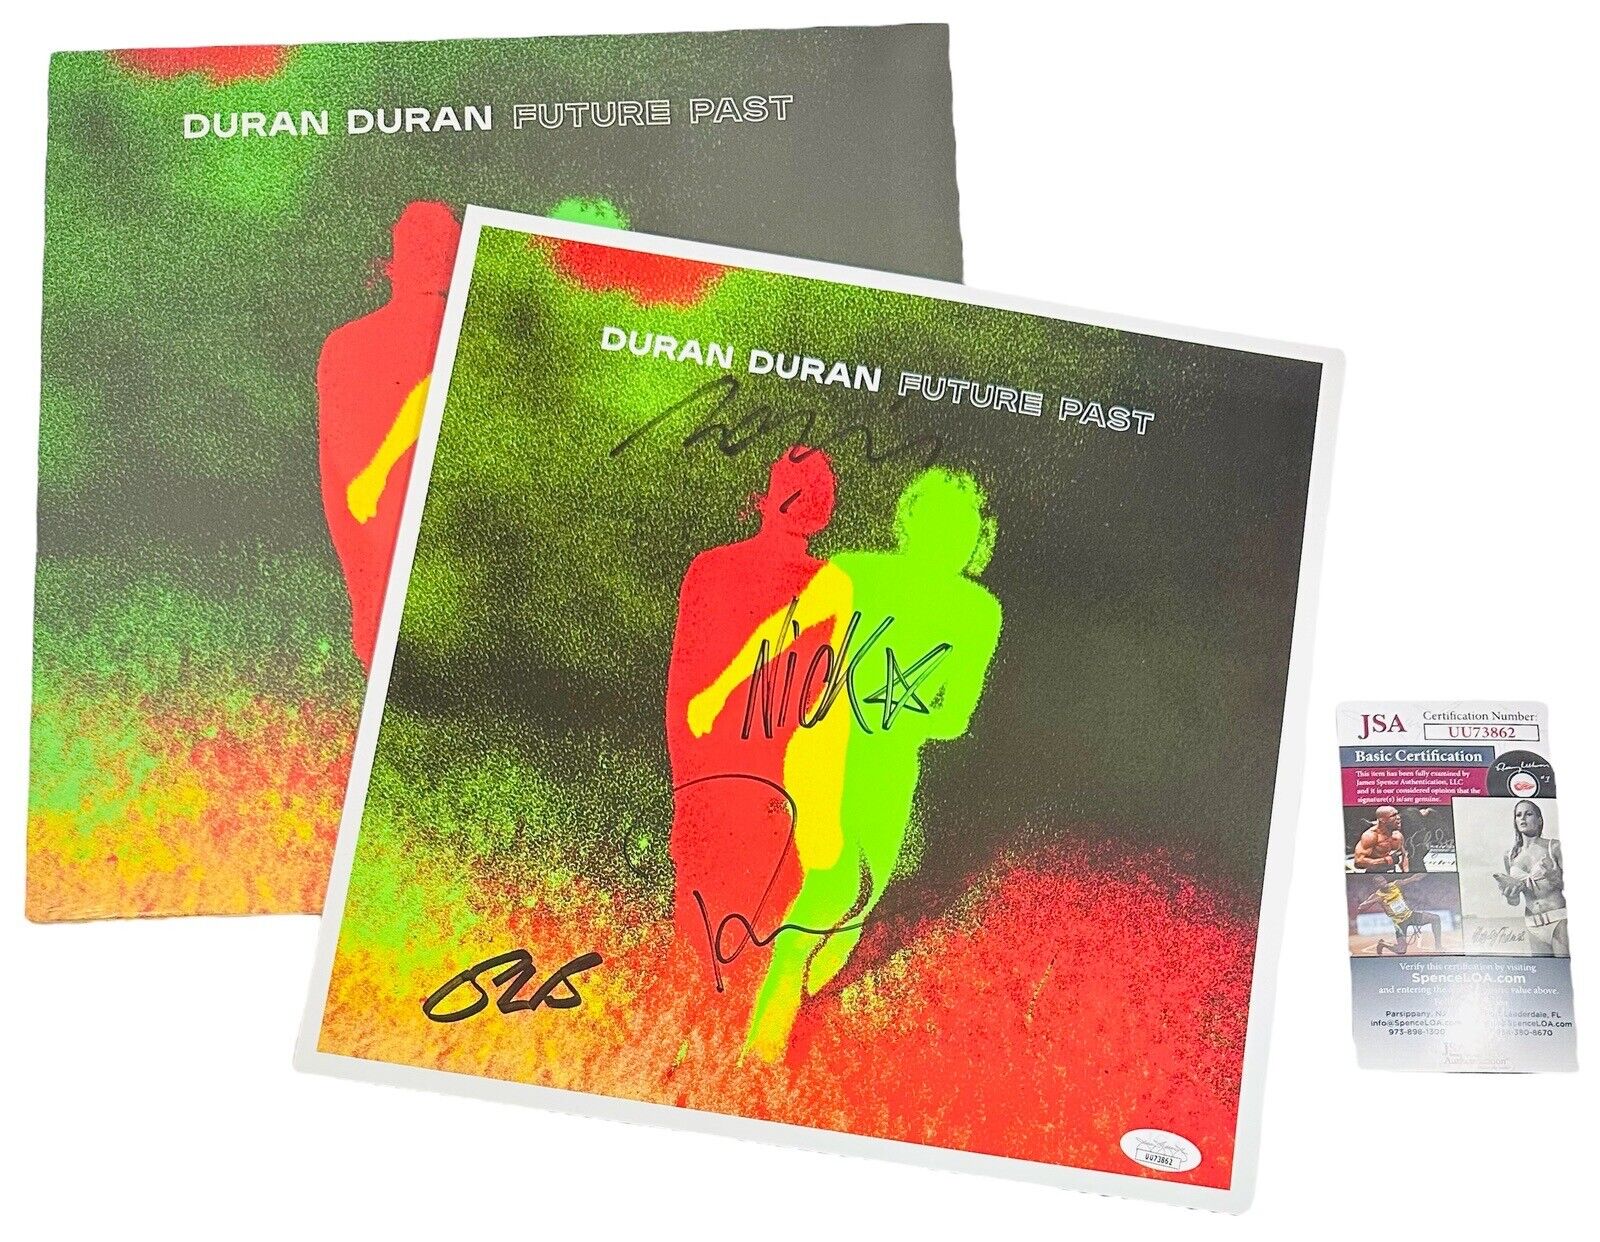 Duran Duran Band Signed Future Past Poster & LP Vinyl Album Simon Le Bon JSA COA